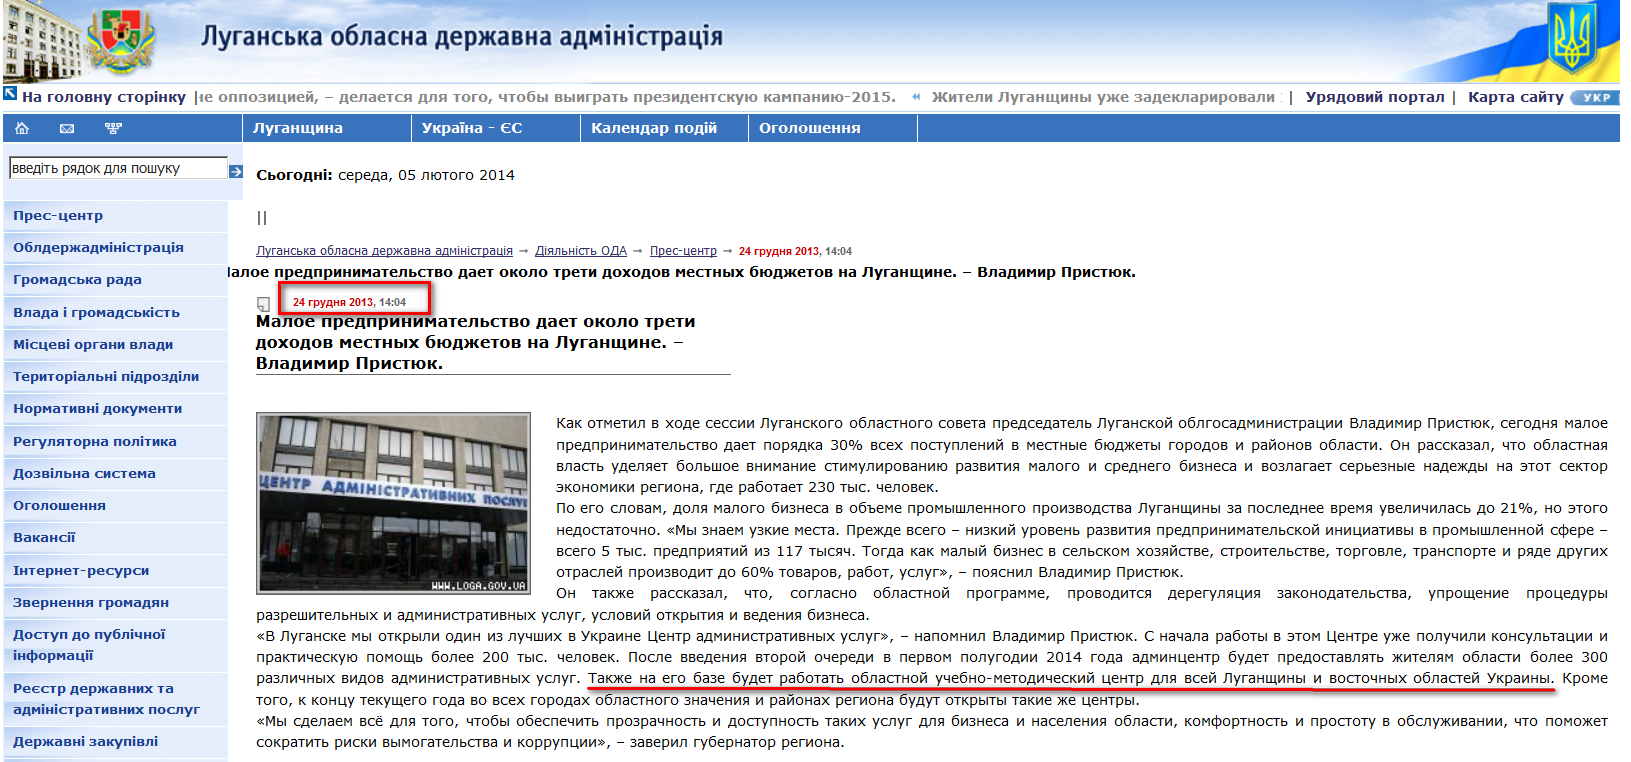 http://www.loga.gov.ua/oda/press/news/2013/12/24/news_62114.html